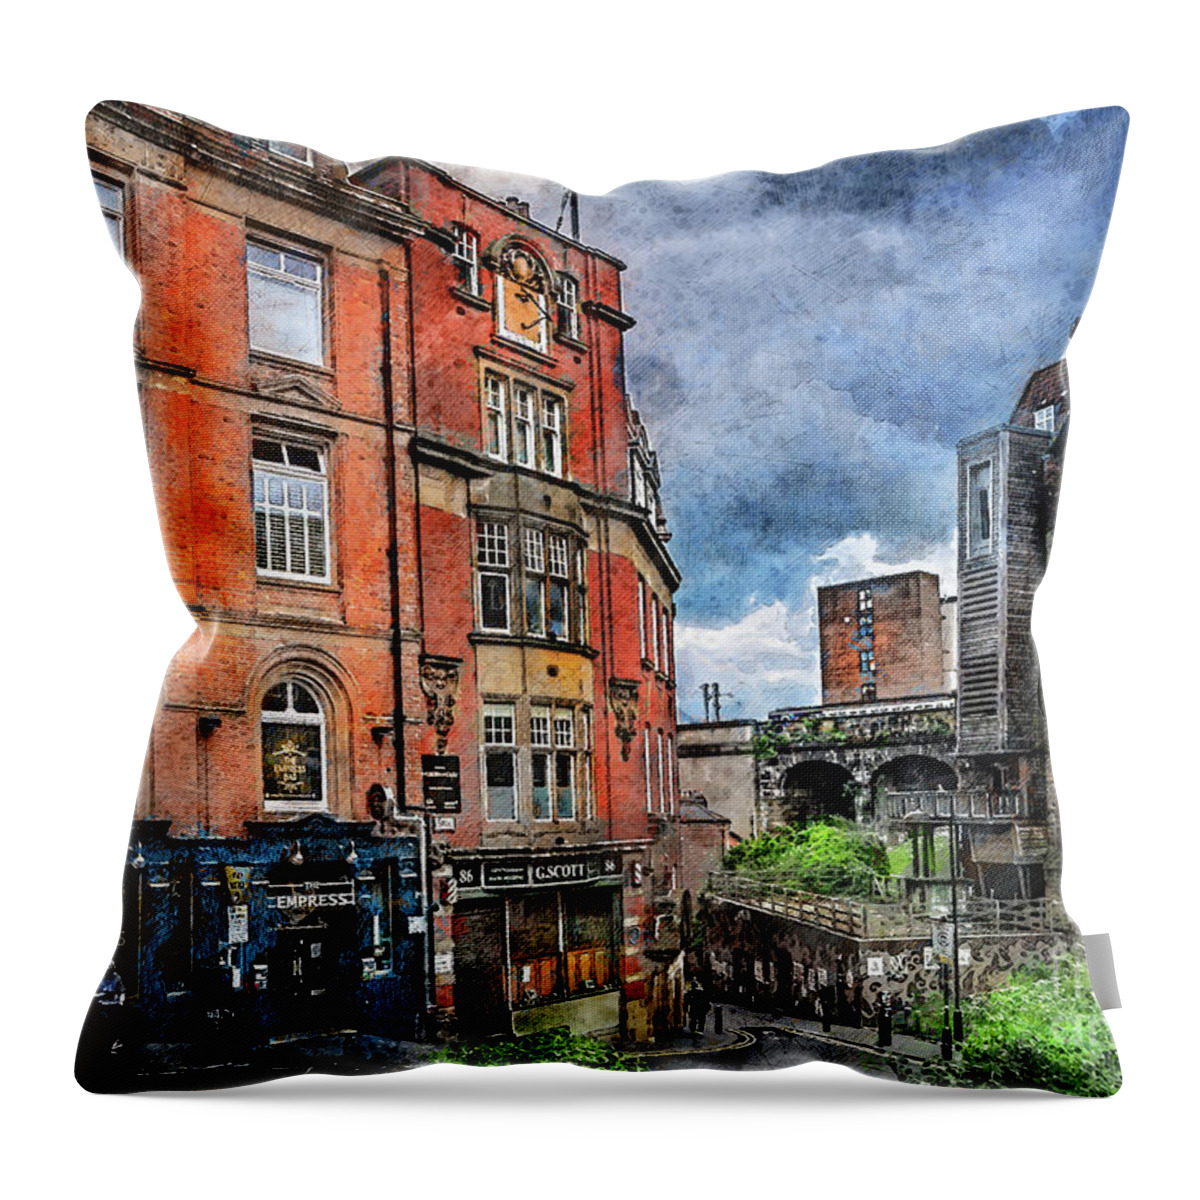 Newcastle Upon Tyne Throw Pillow featuring the digital art Newcastle upon Tyne city art #9 by Justyna Jaszke JBJart